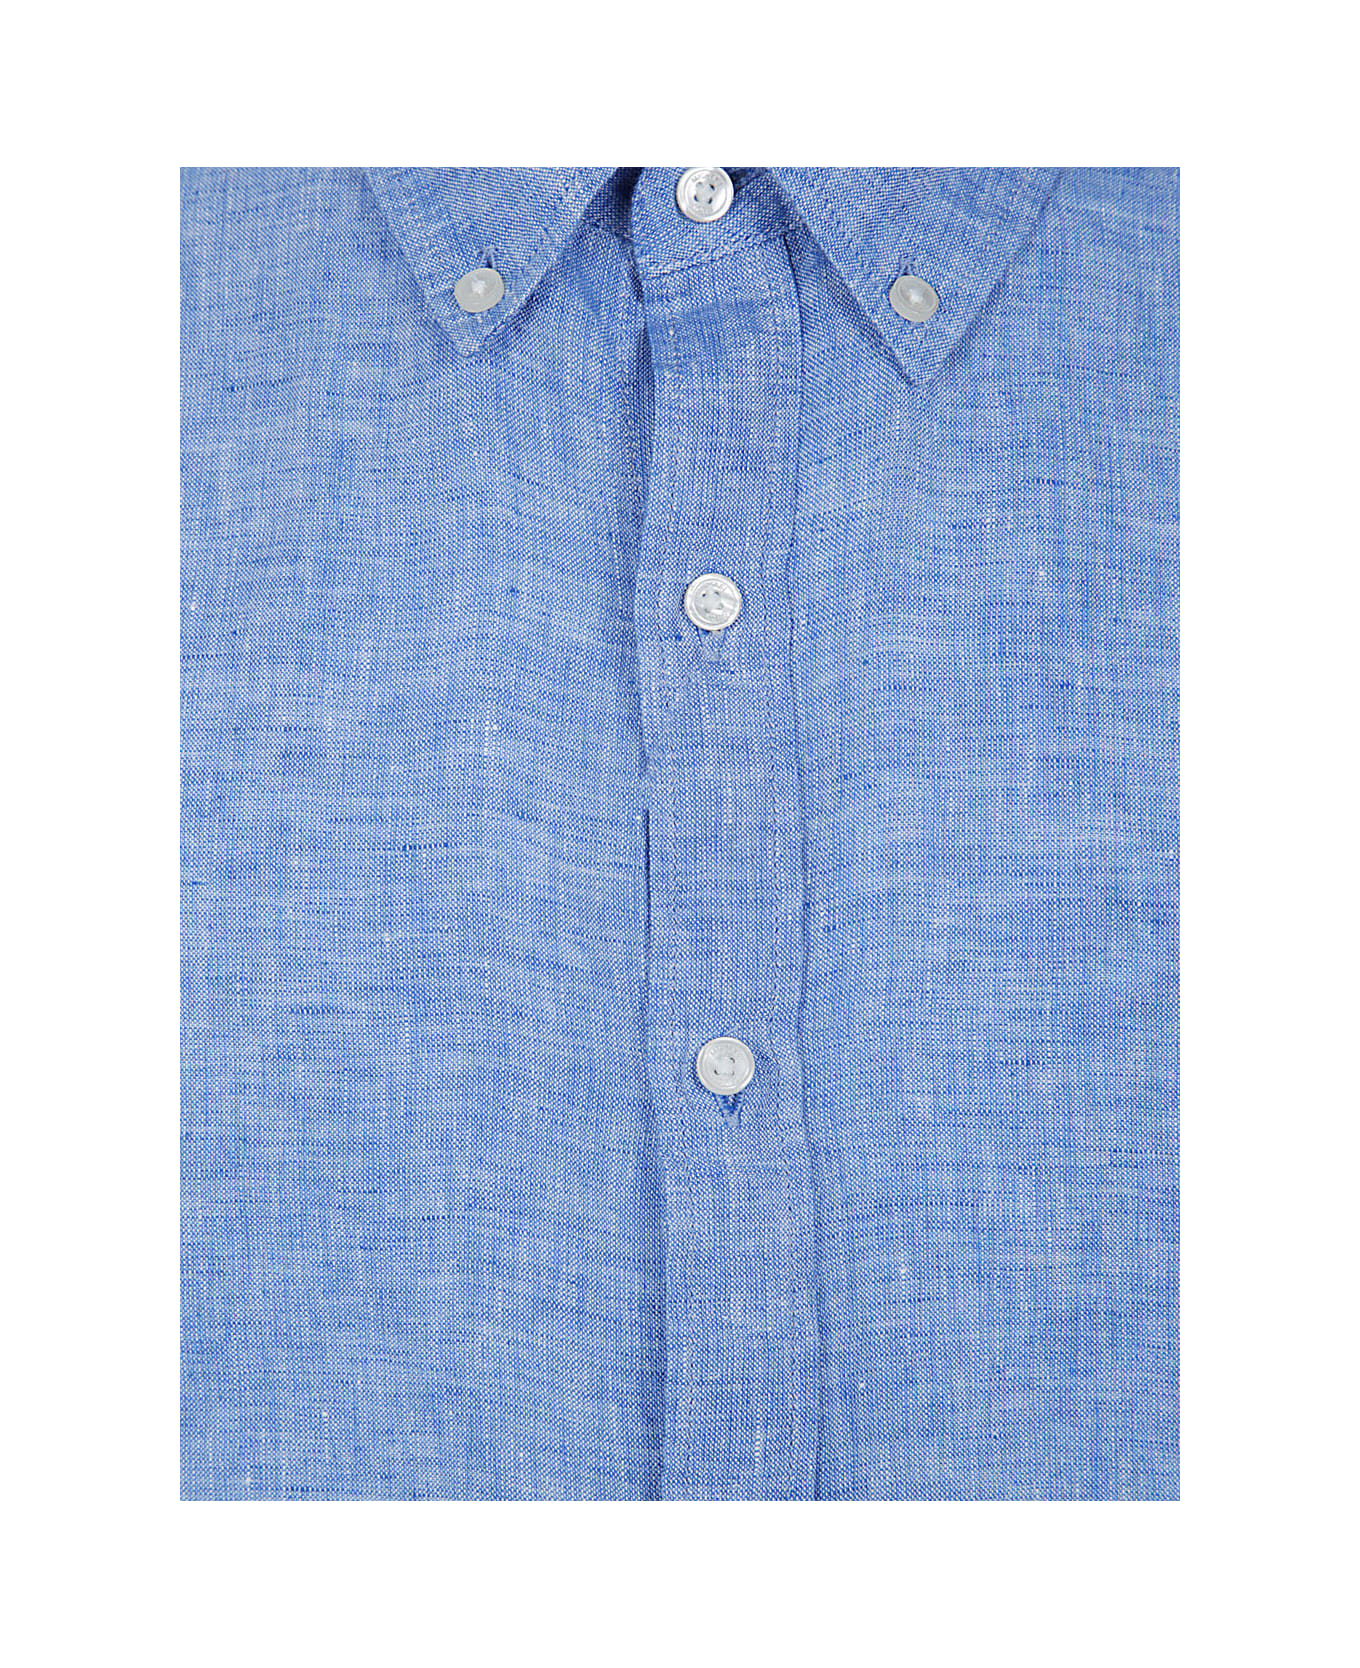 Michael Kors Ls Linen T-shirt - Grecian Blue